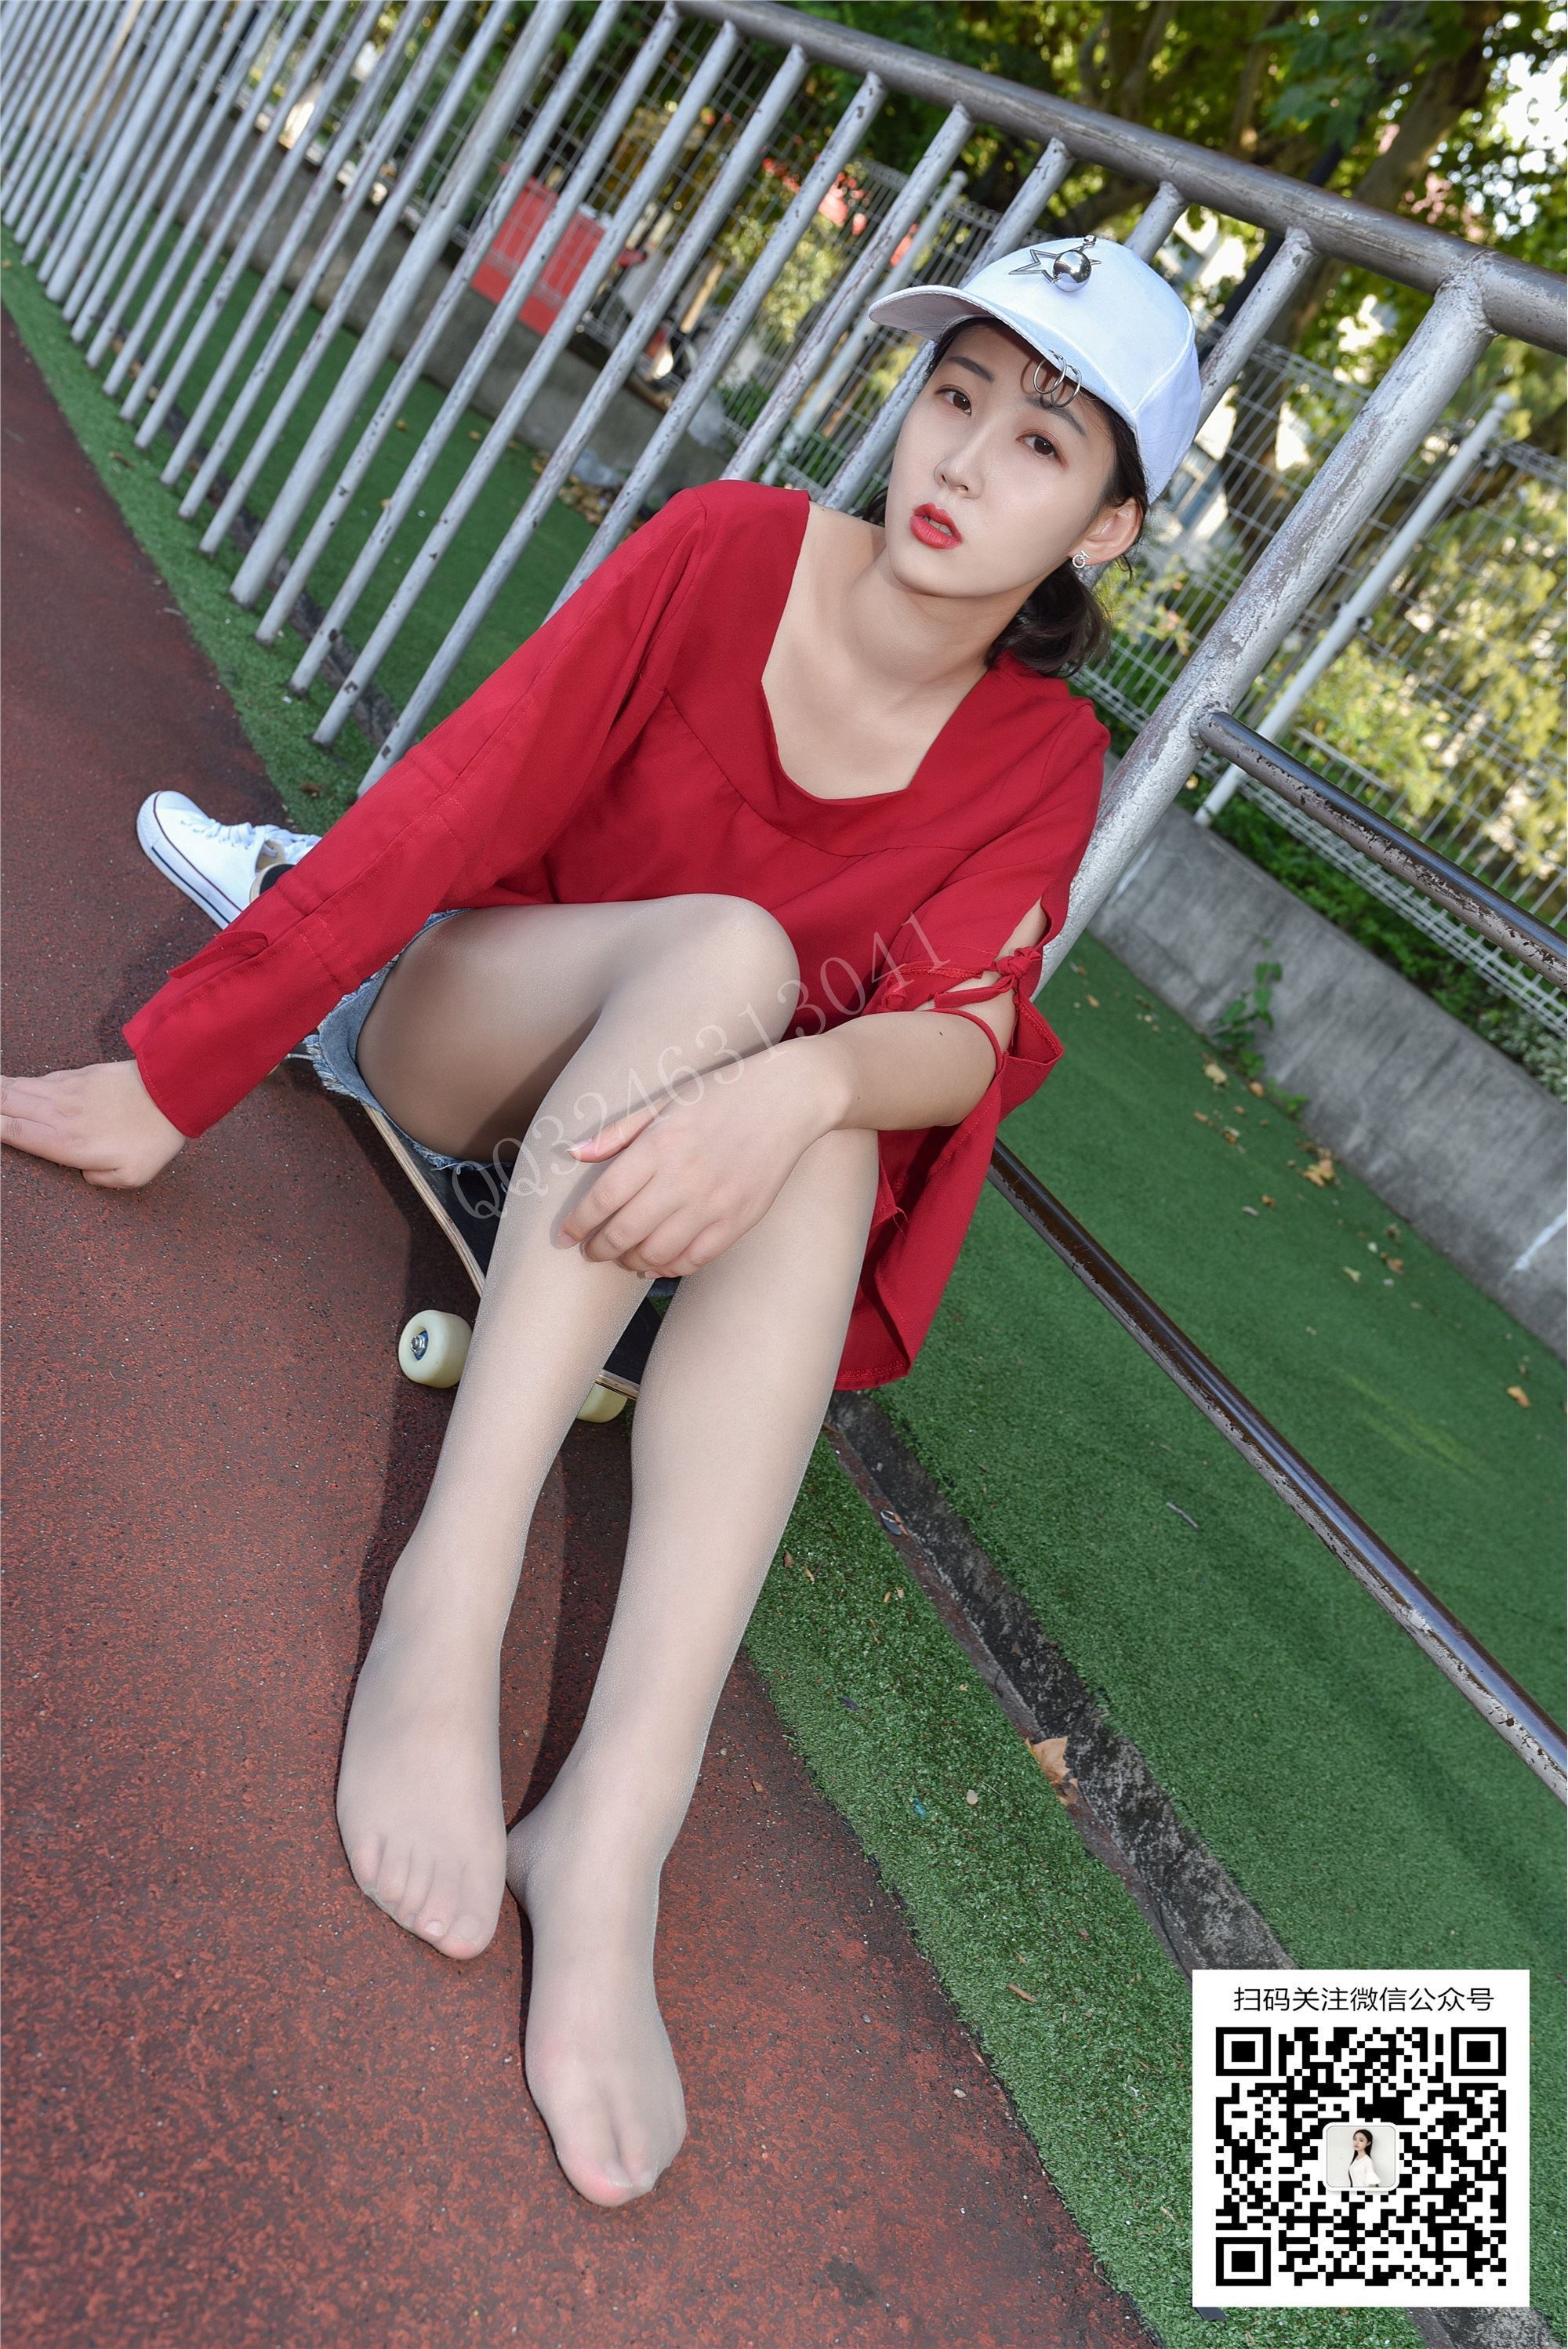 Yueyue plays skateboarding in silk stockings